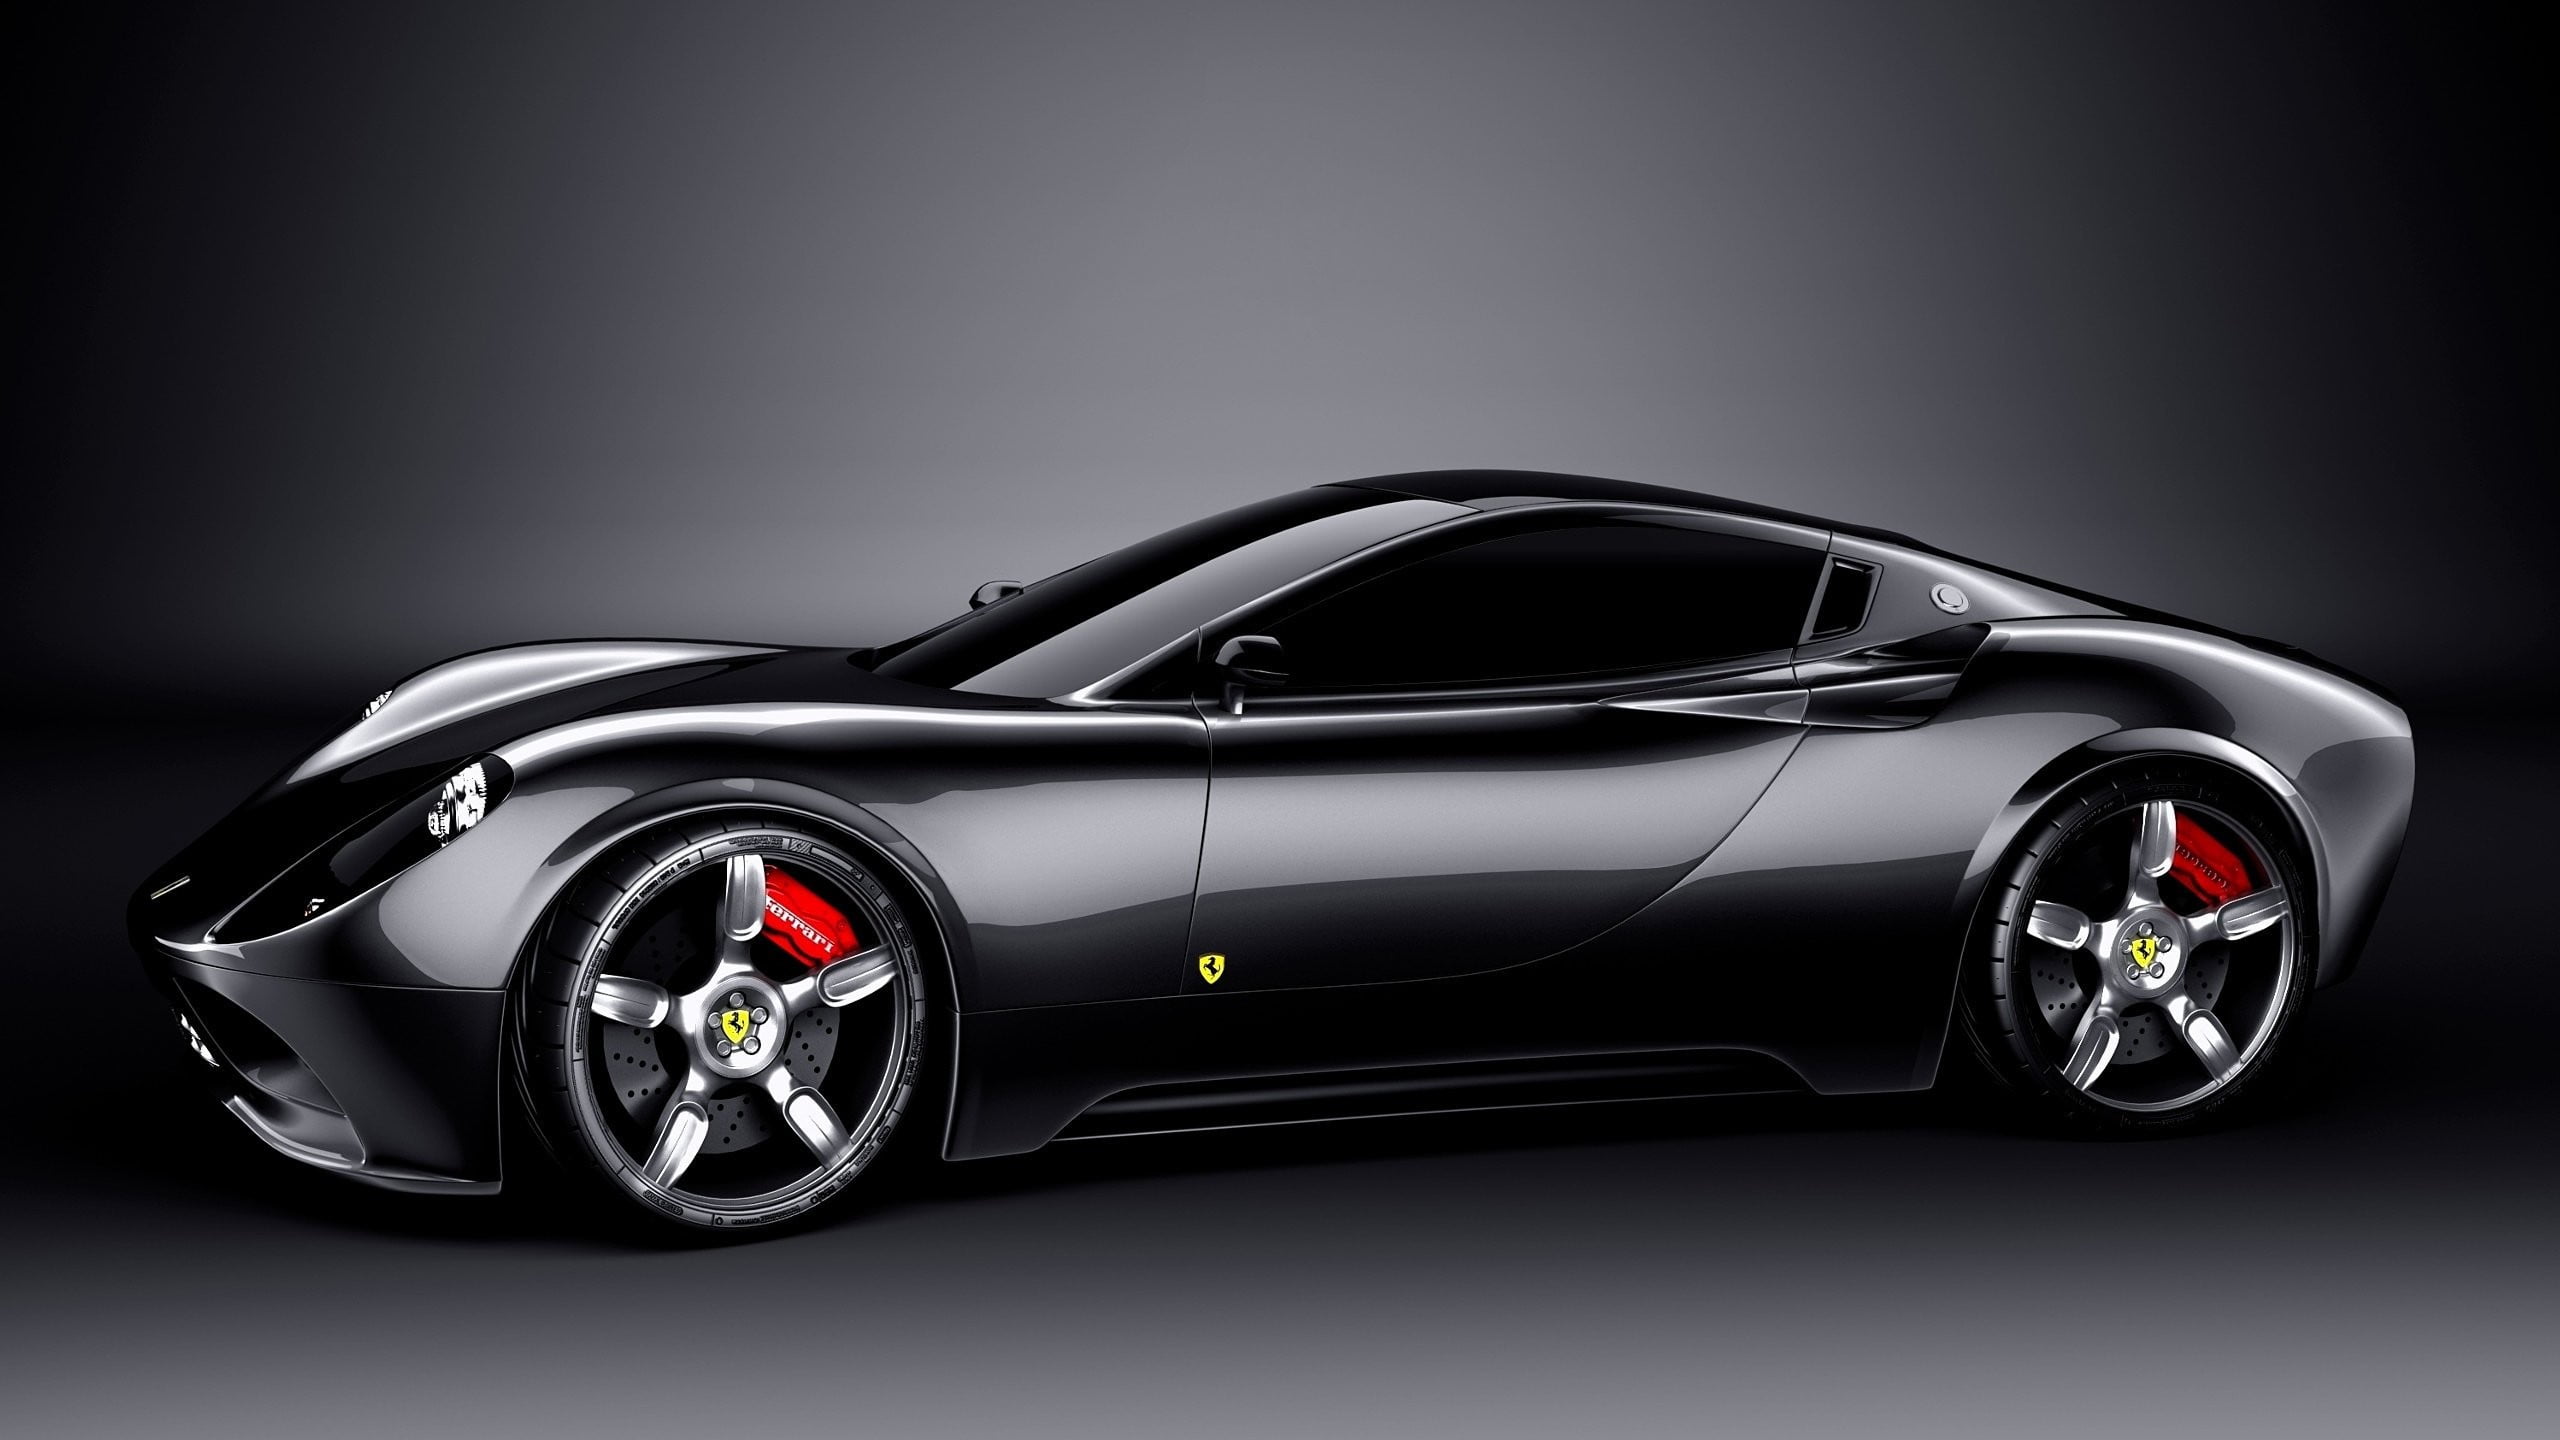 Ferrari Concept Cars